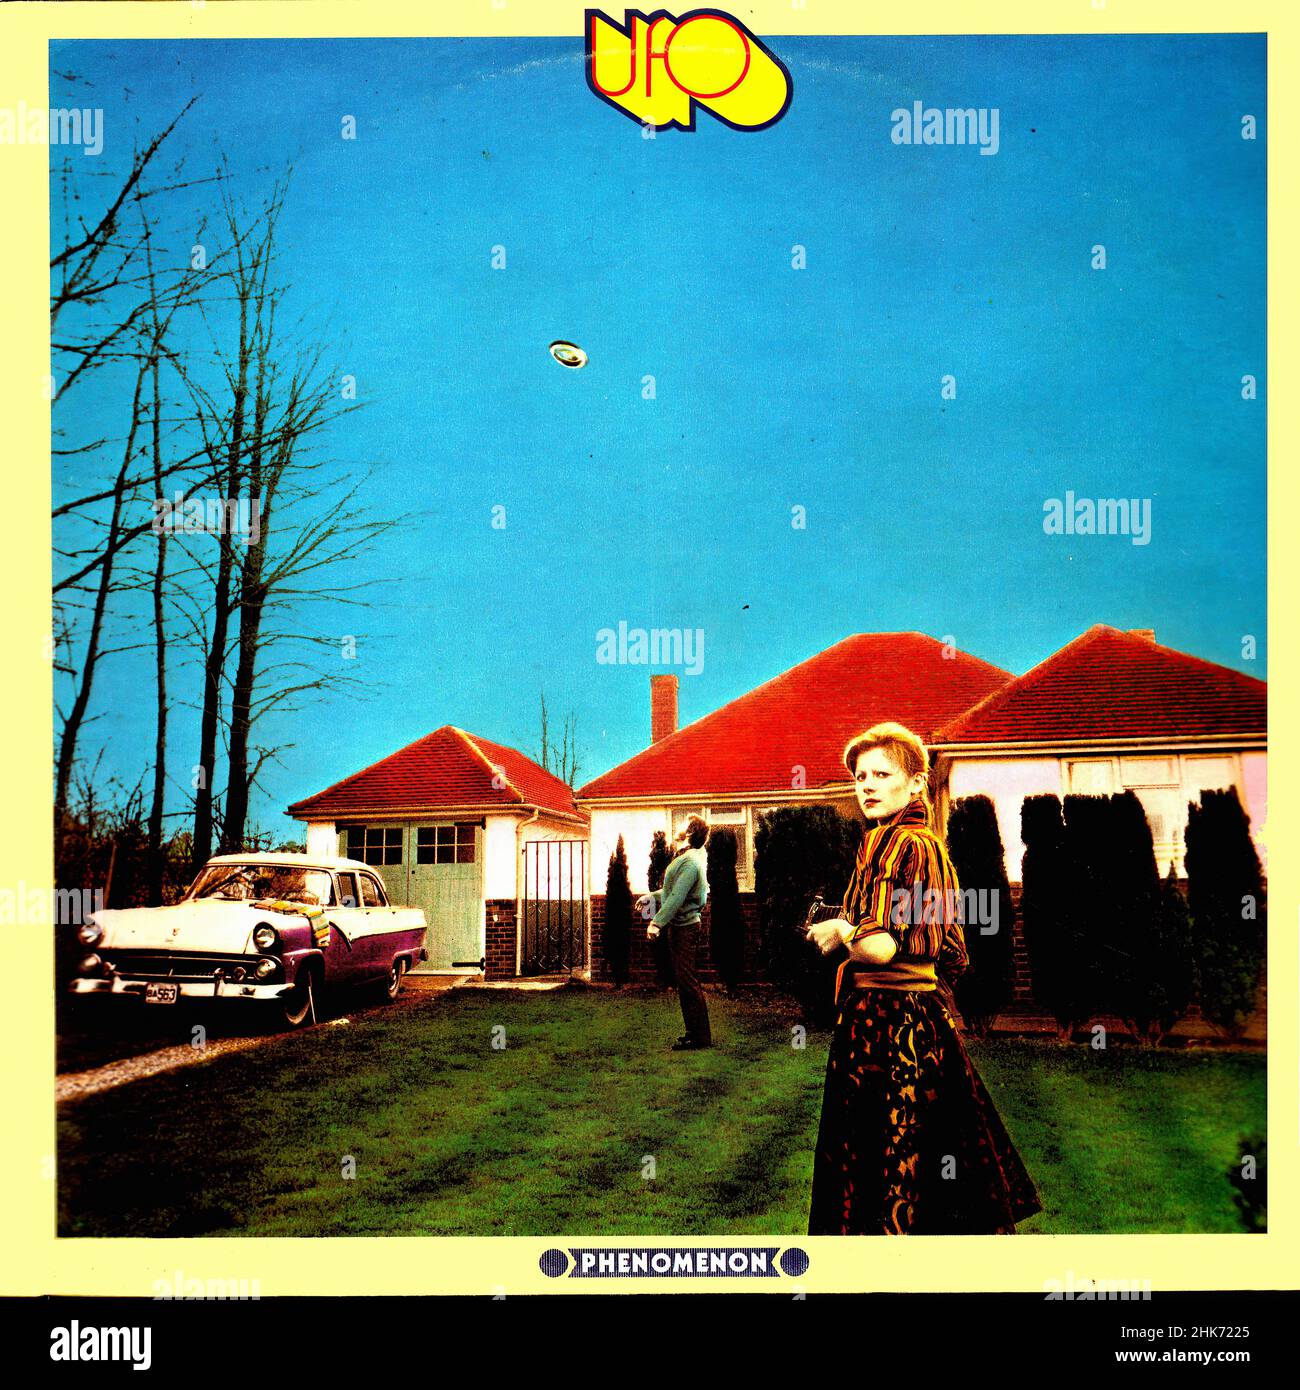 Vintage vinyl record cover - UFO - Phenomenon - UK - 1974 Stock Photo